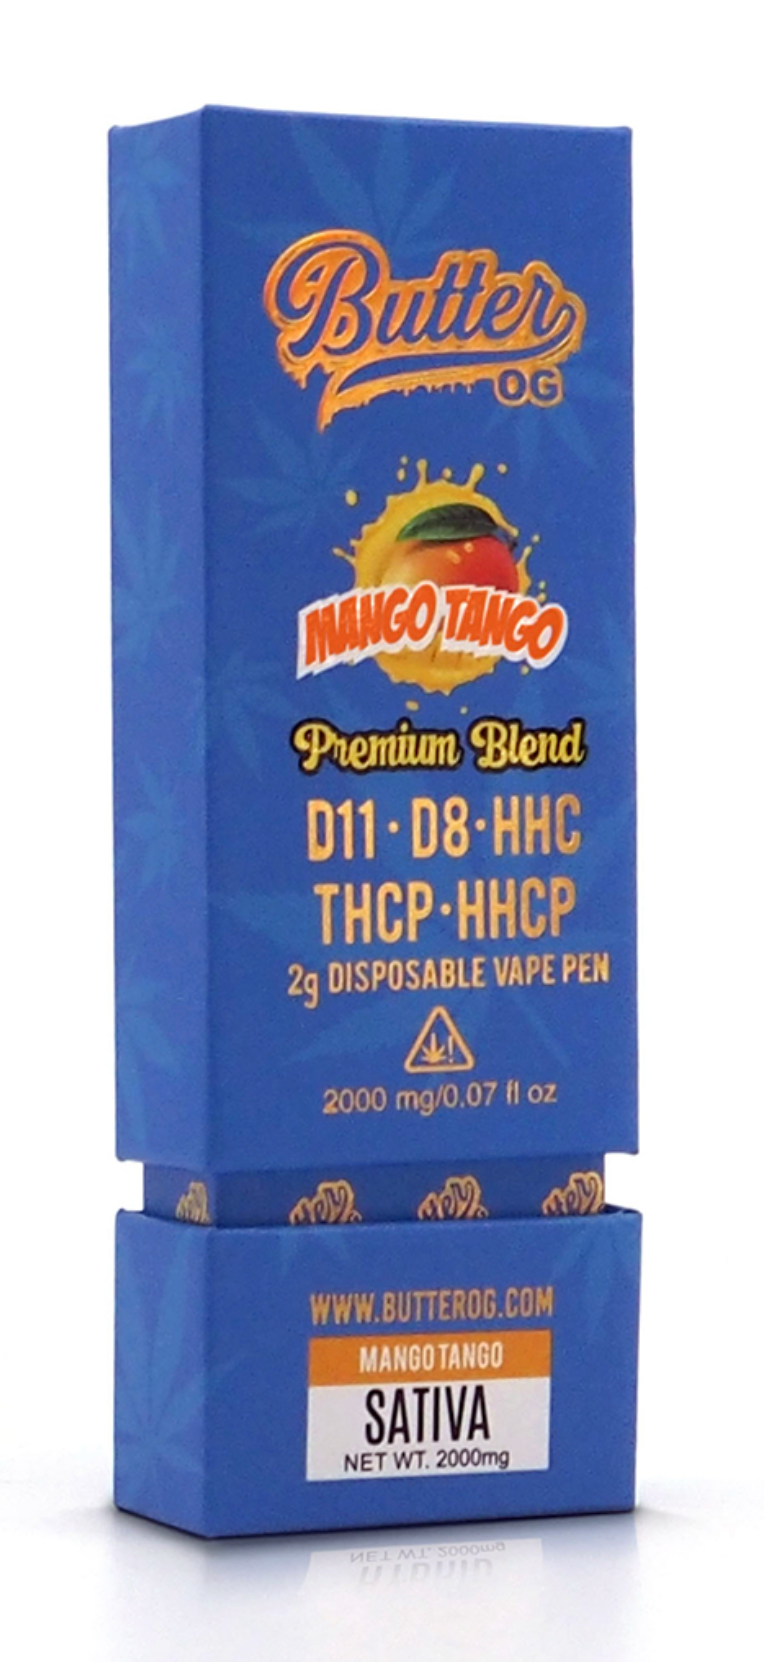 Butter OG Premium Blend D11, D8, HHC, THCP, HHCP 2g Disposable Vape - Mango Tango (Sativa) - Headshop.com